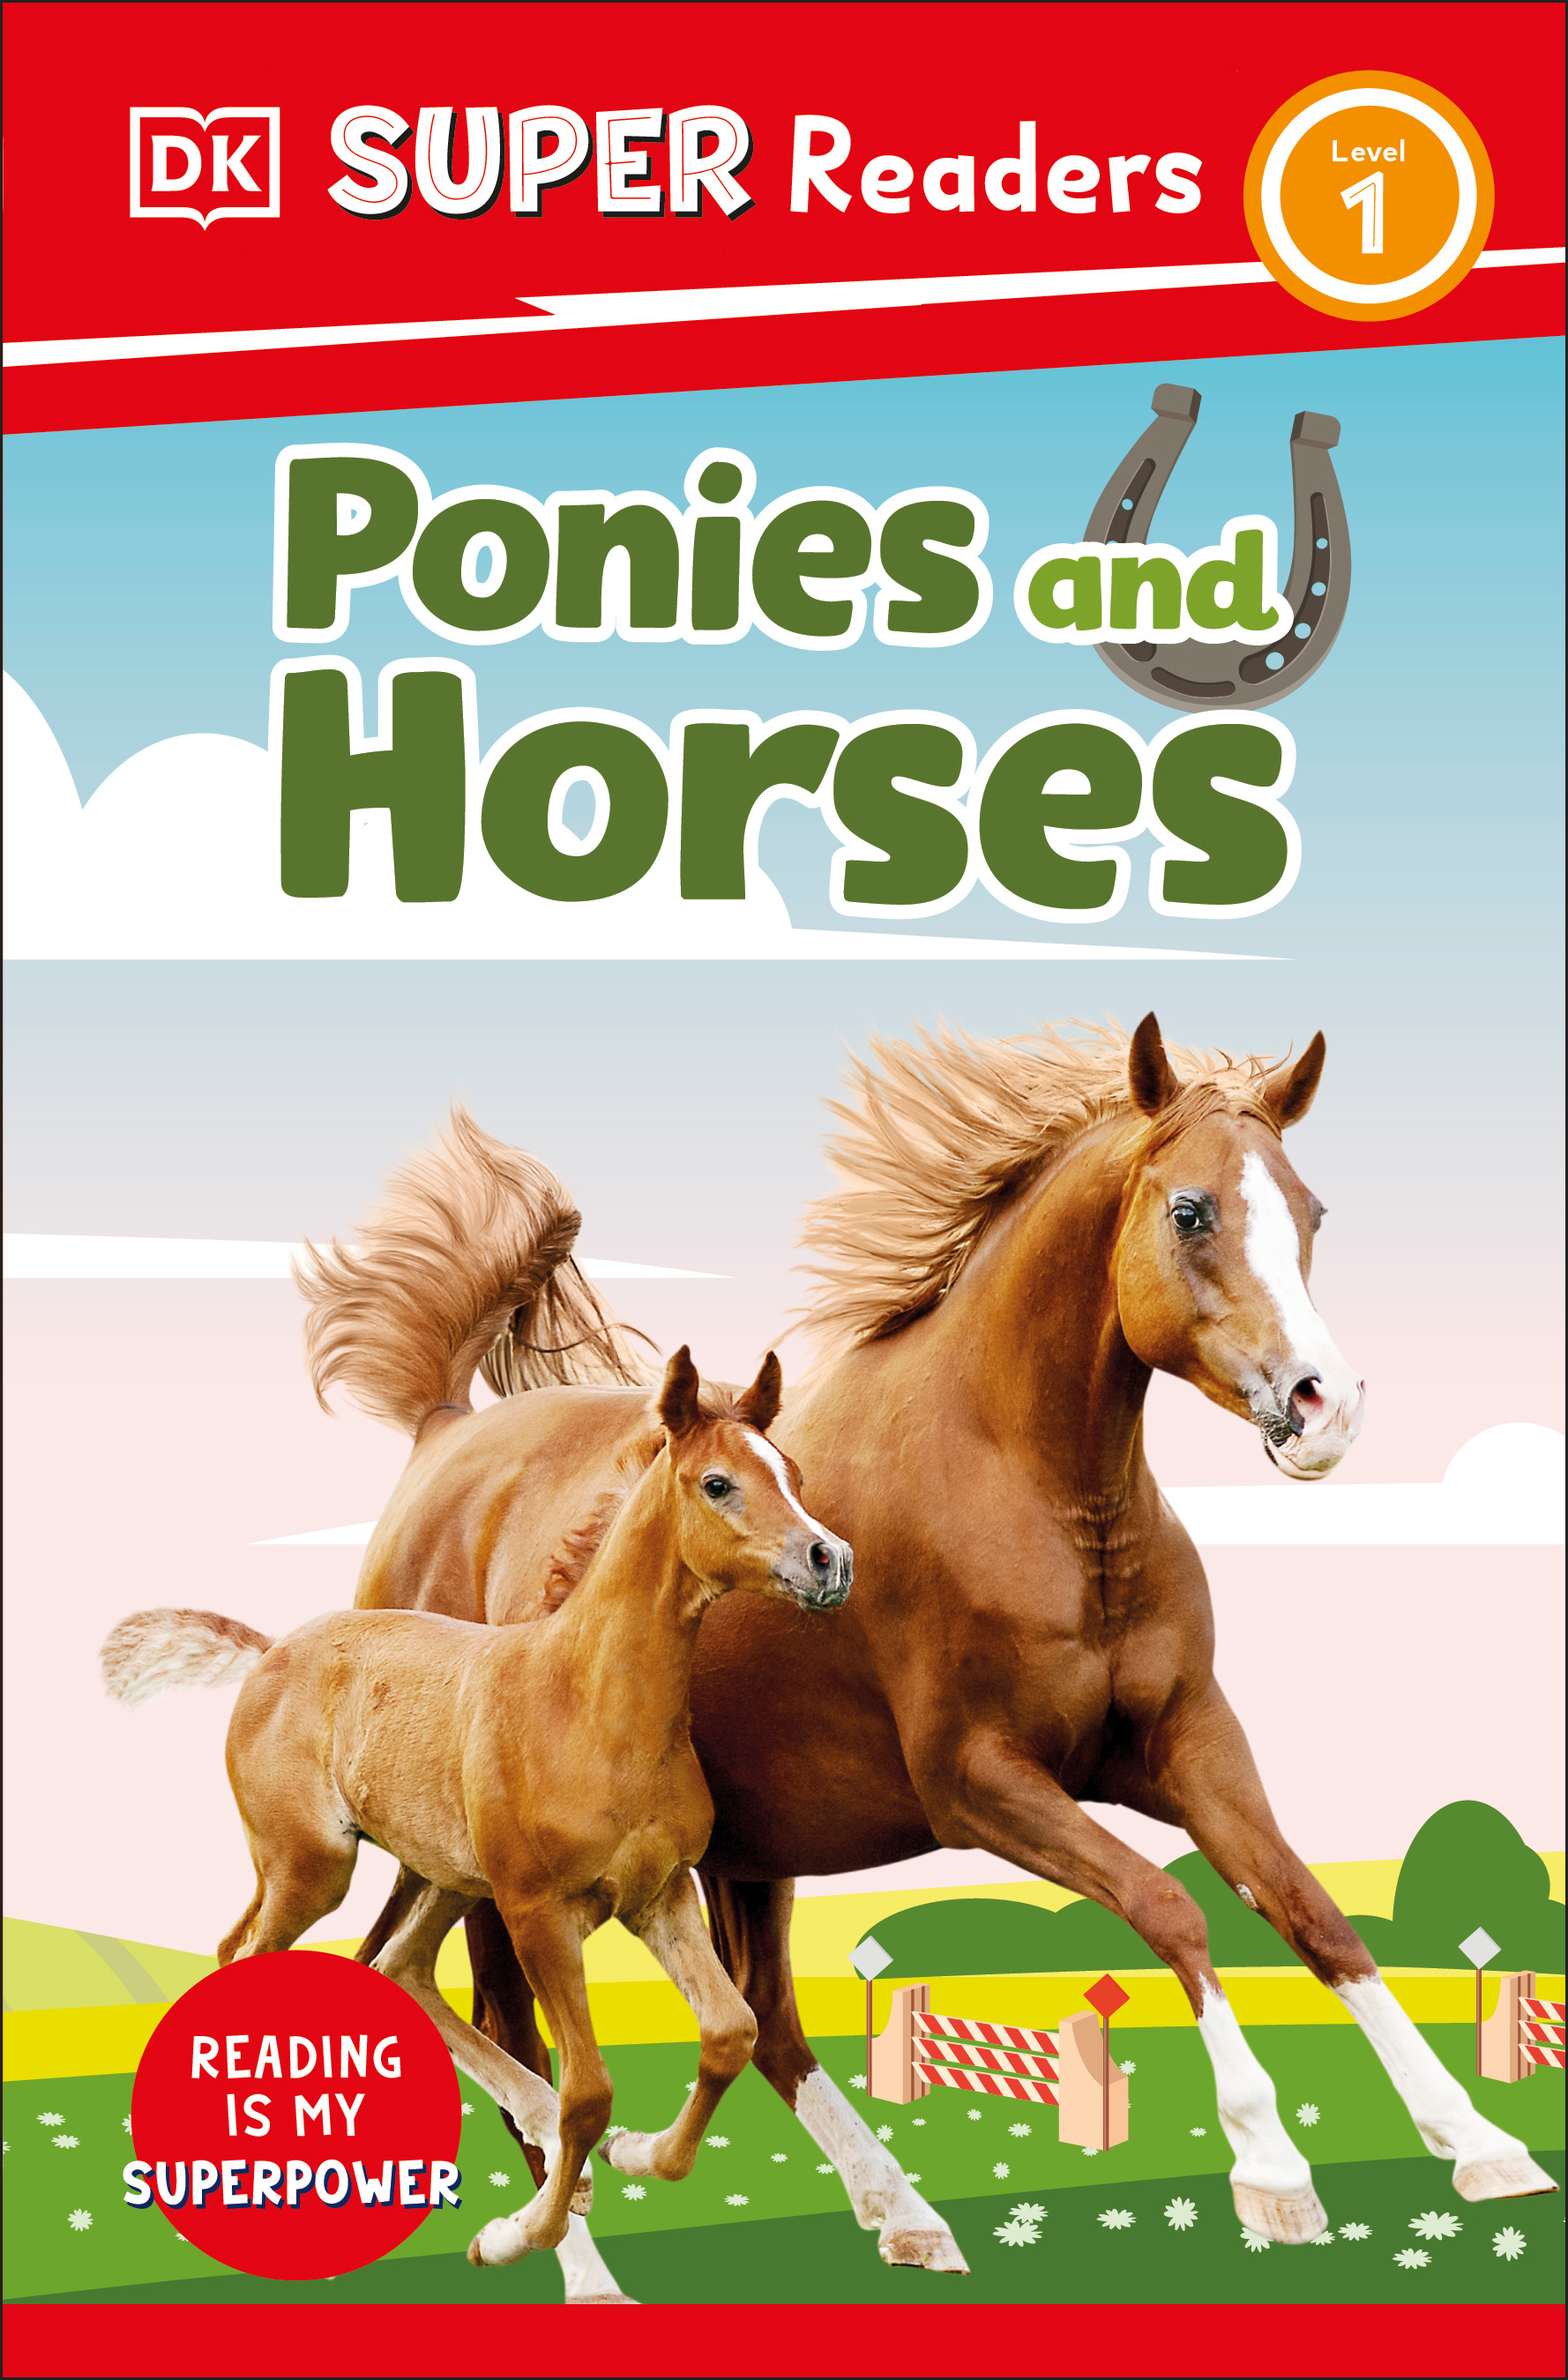 DK Super Readers Level 1 - Ponies and Horses | 